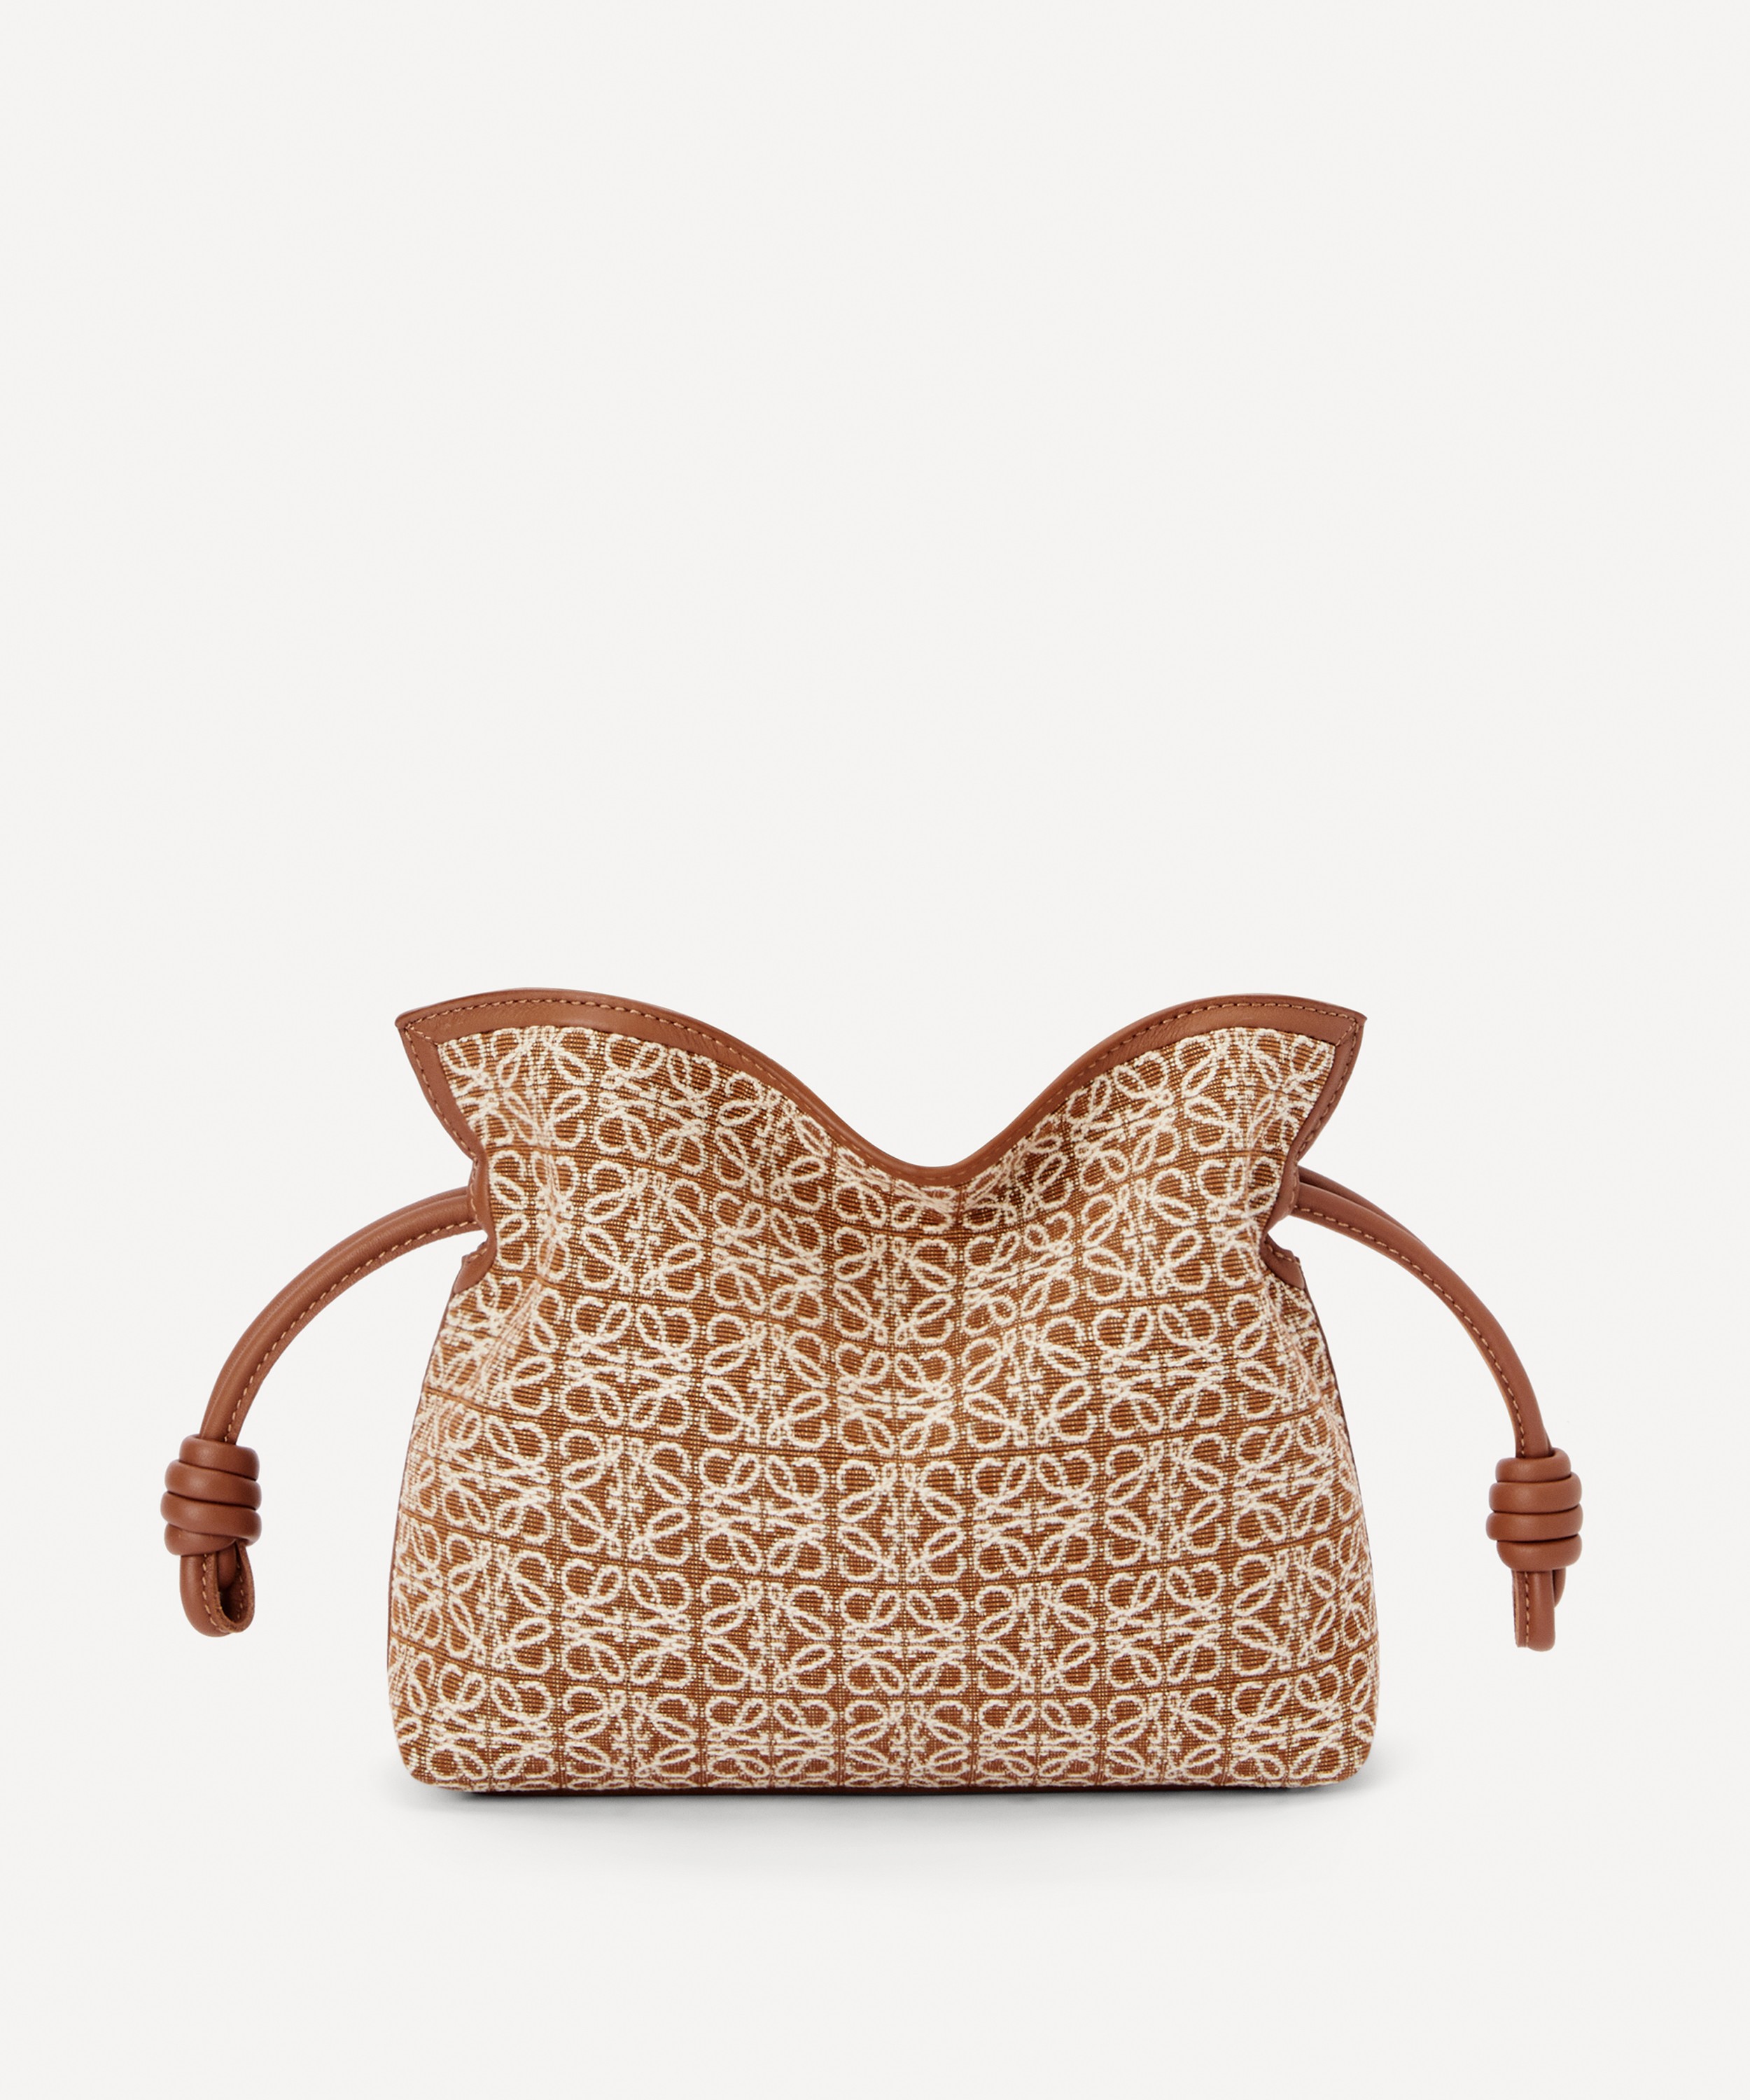 Louis Vuitton Pleated Bag